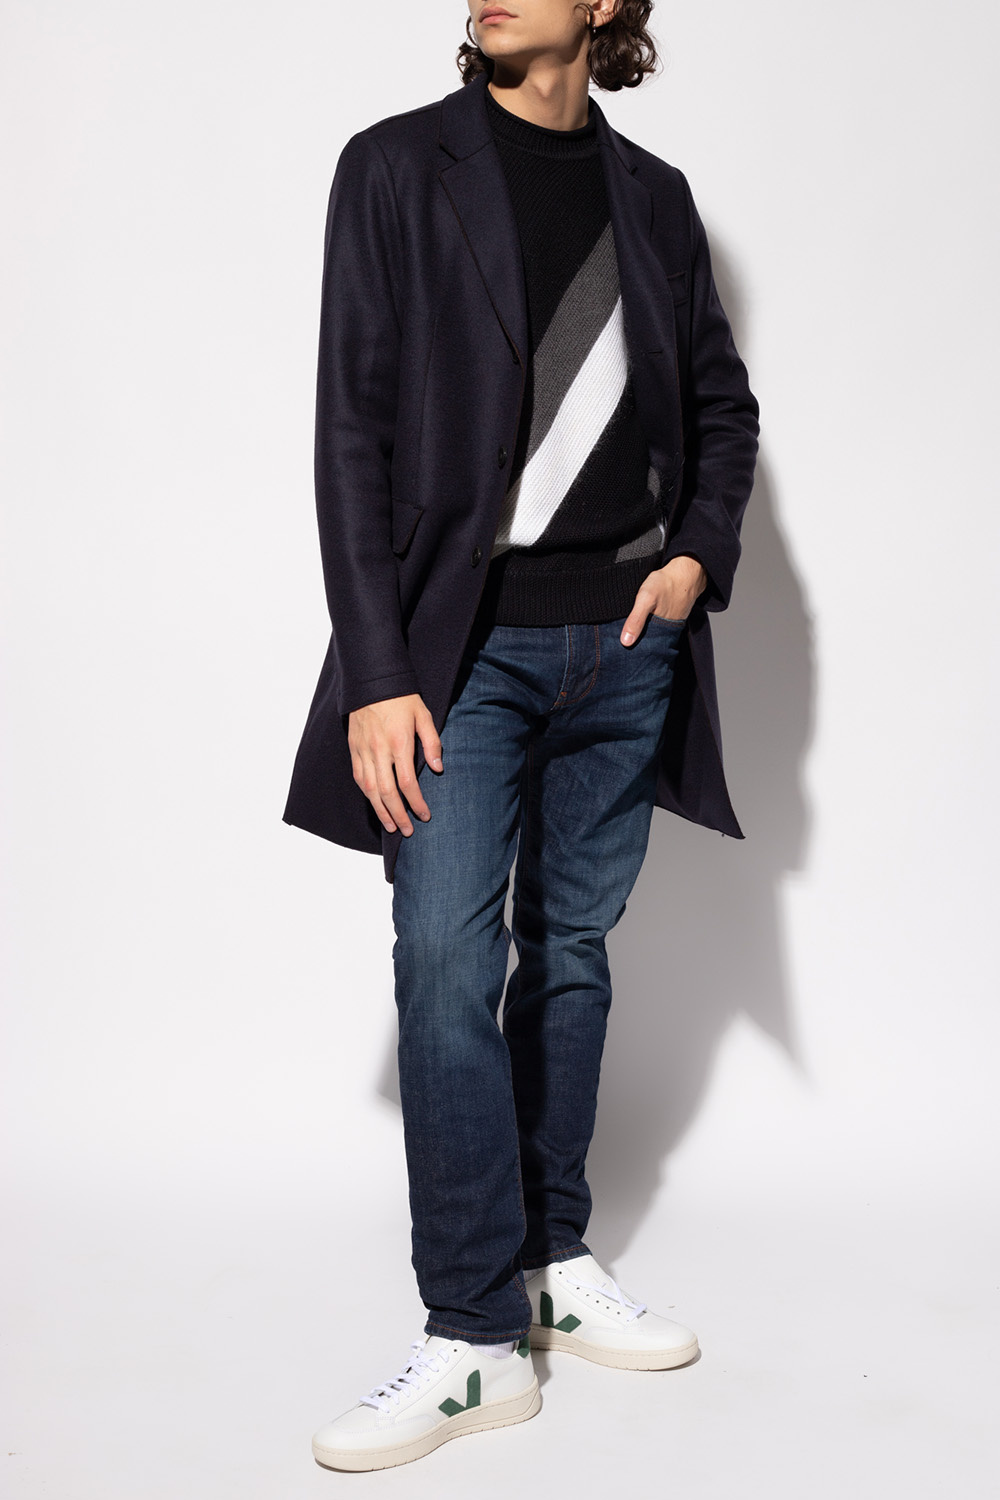 Emporio Armani Single-vented coat